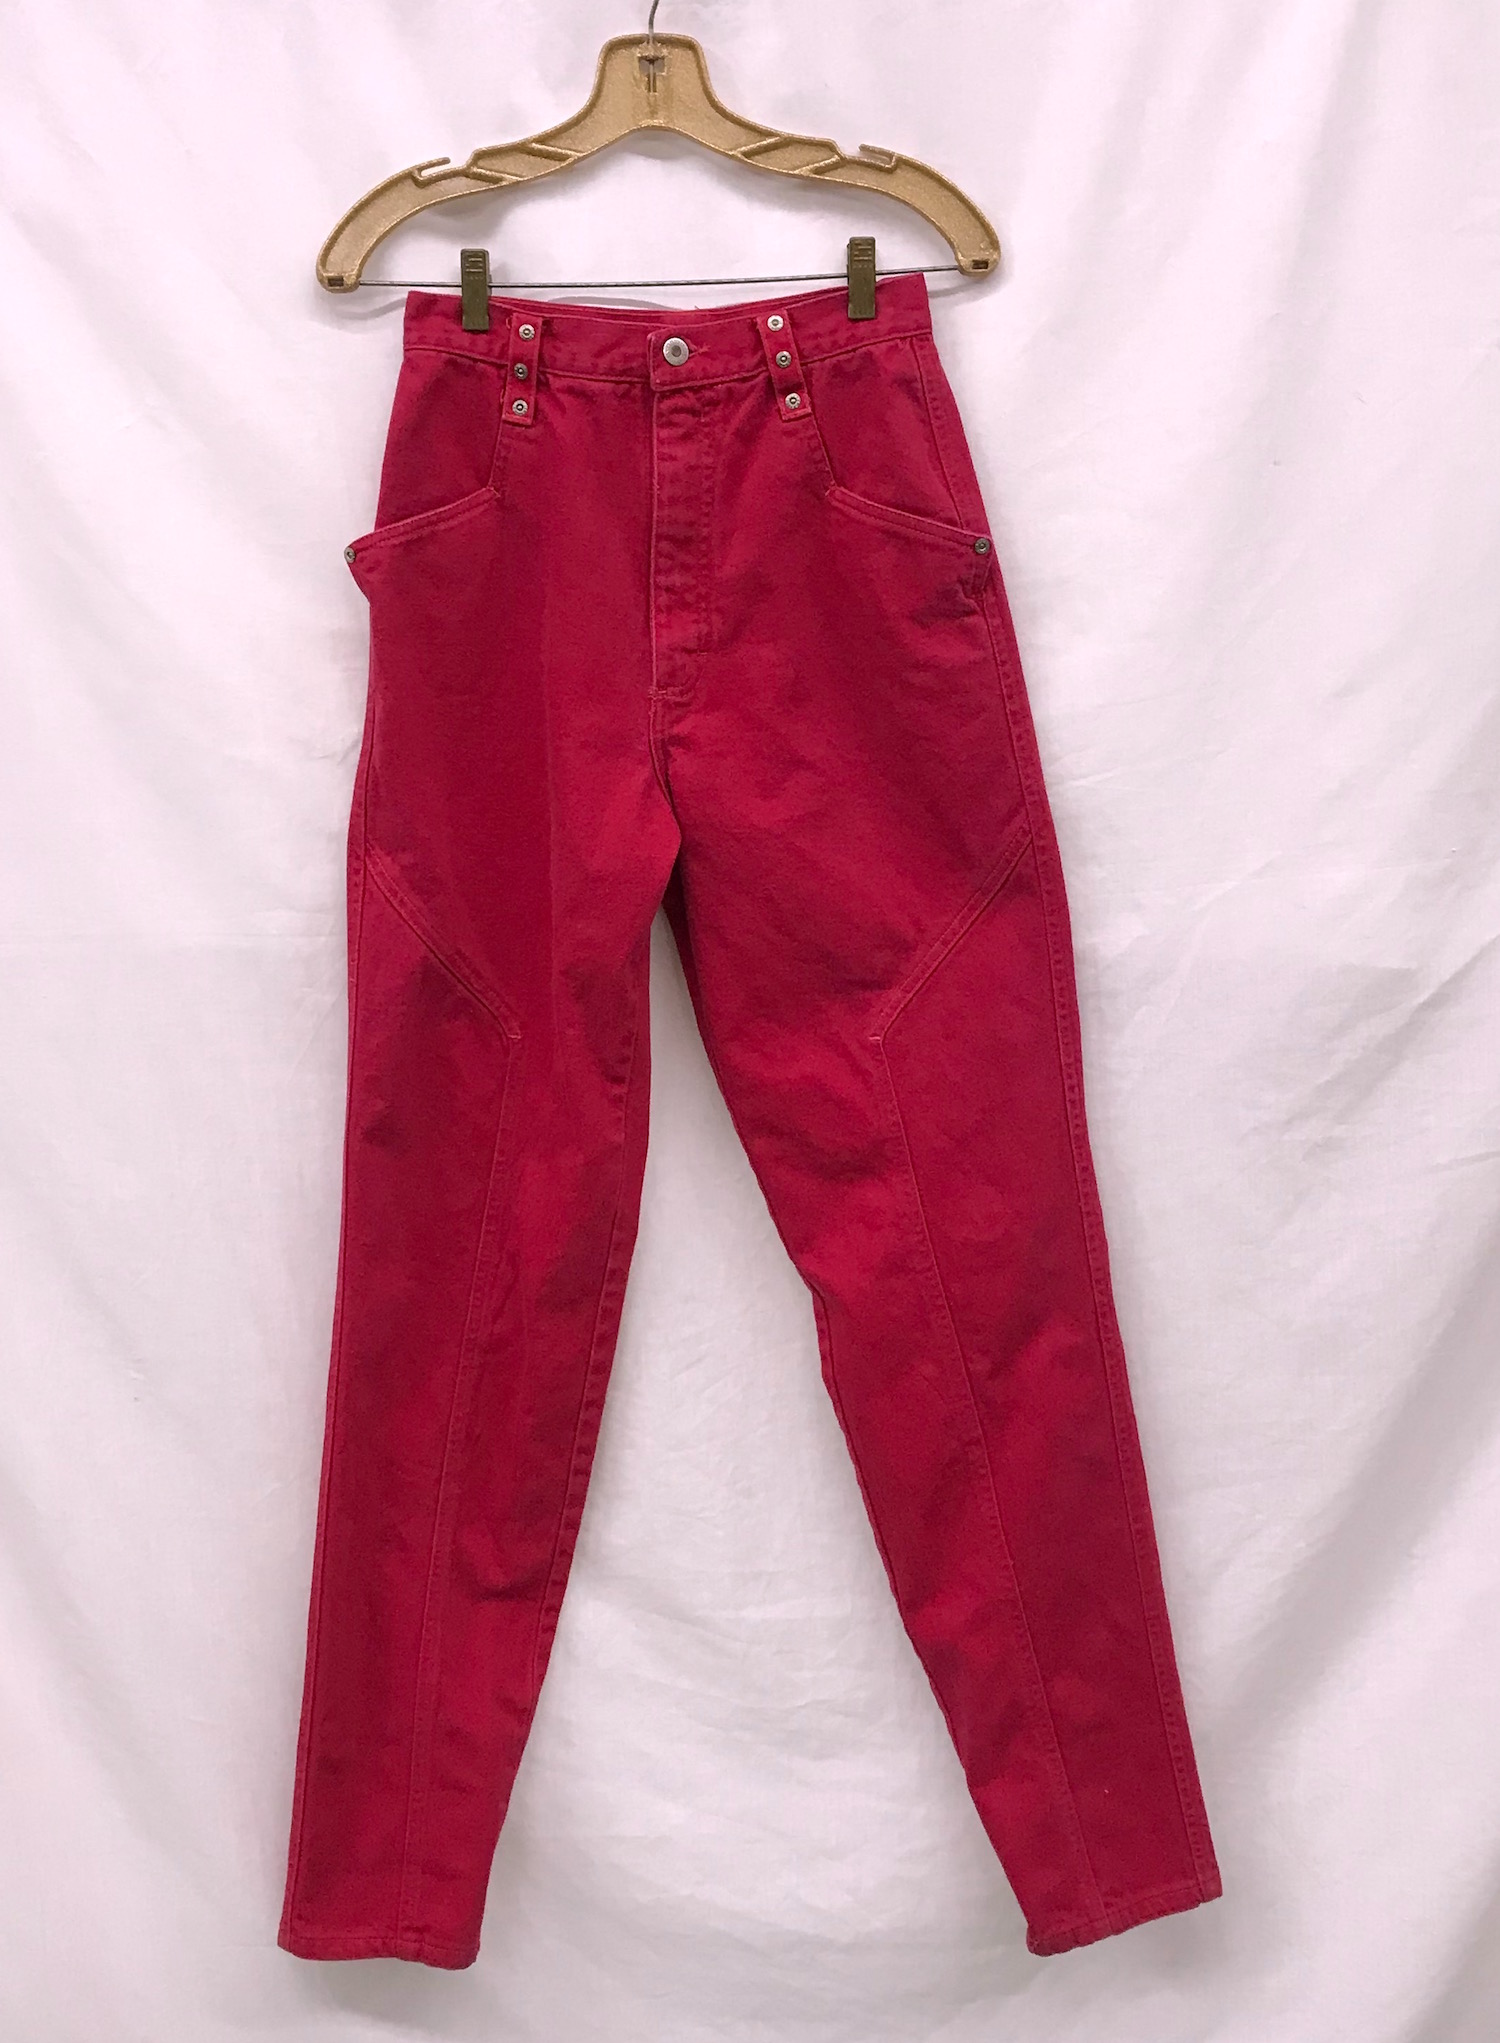 Red Wrangler Hi-waist Jeans - Tucson Thrift Shop